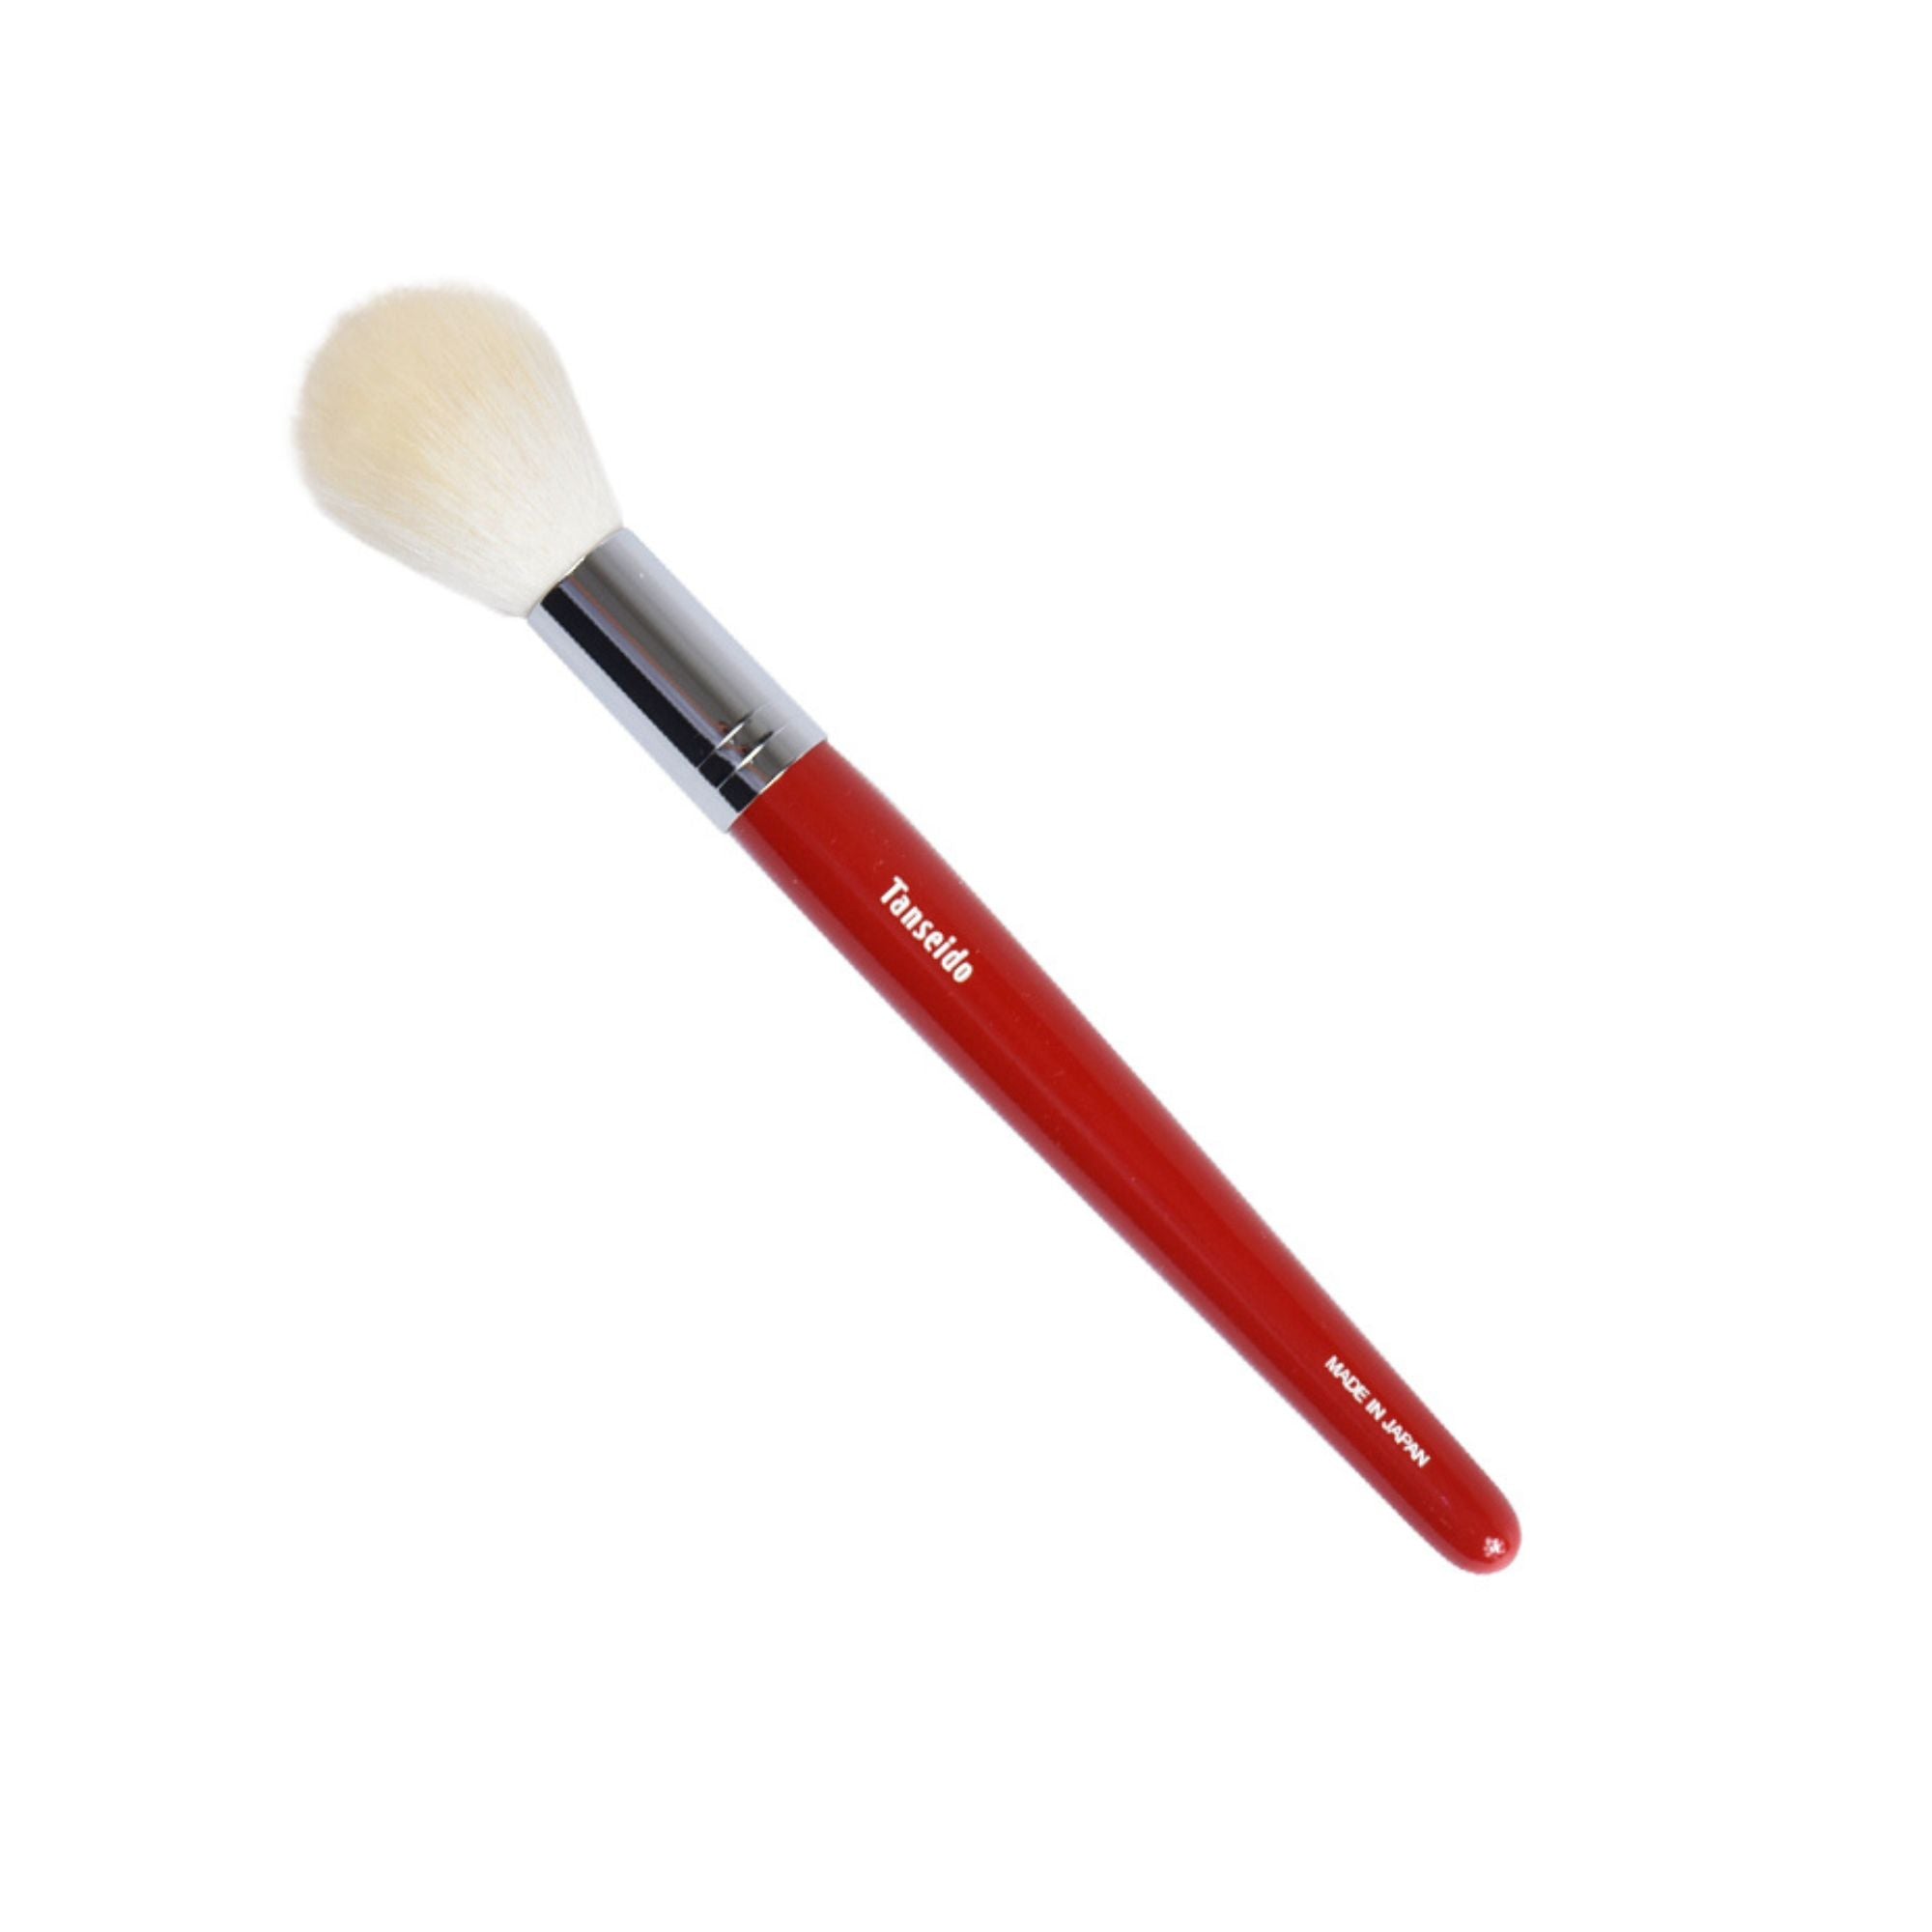 Tanseido EC20 Cheek Brush (8cm handle) - Fude Beauty, Japanese Makeup Brushes